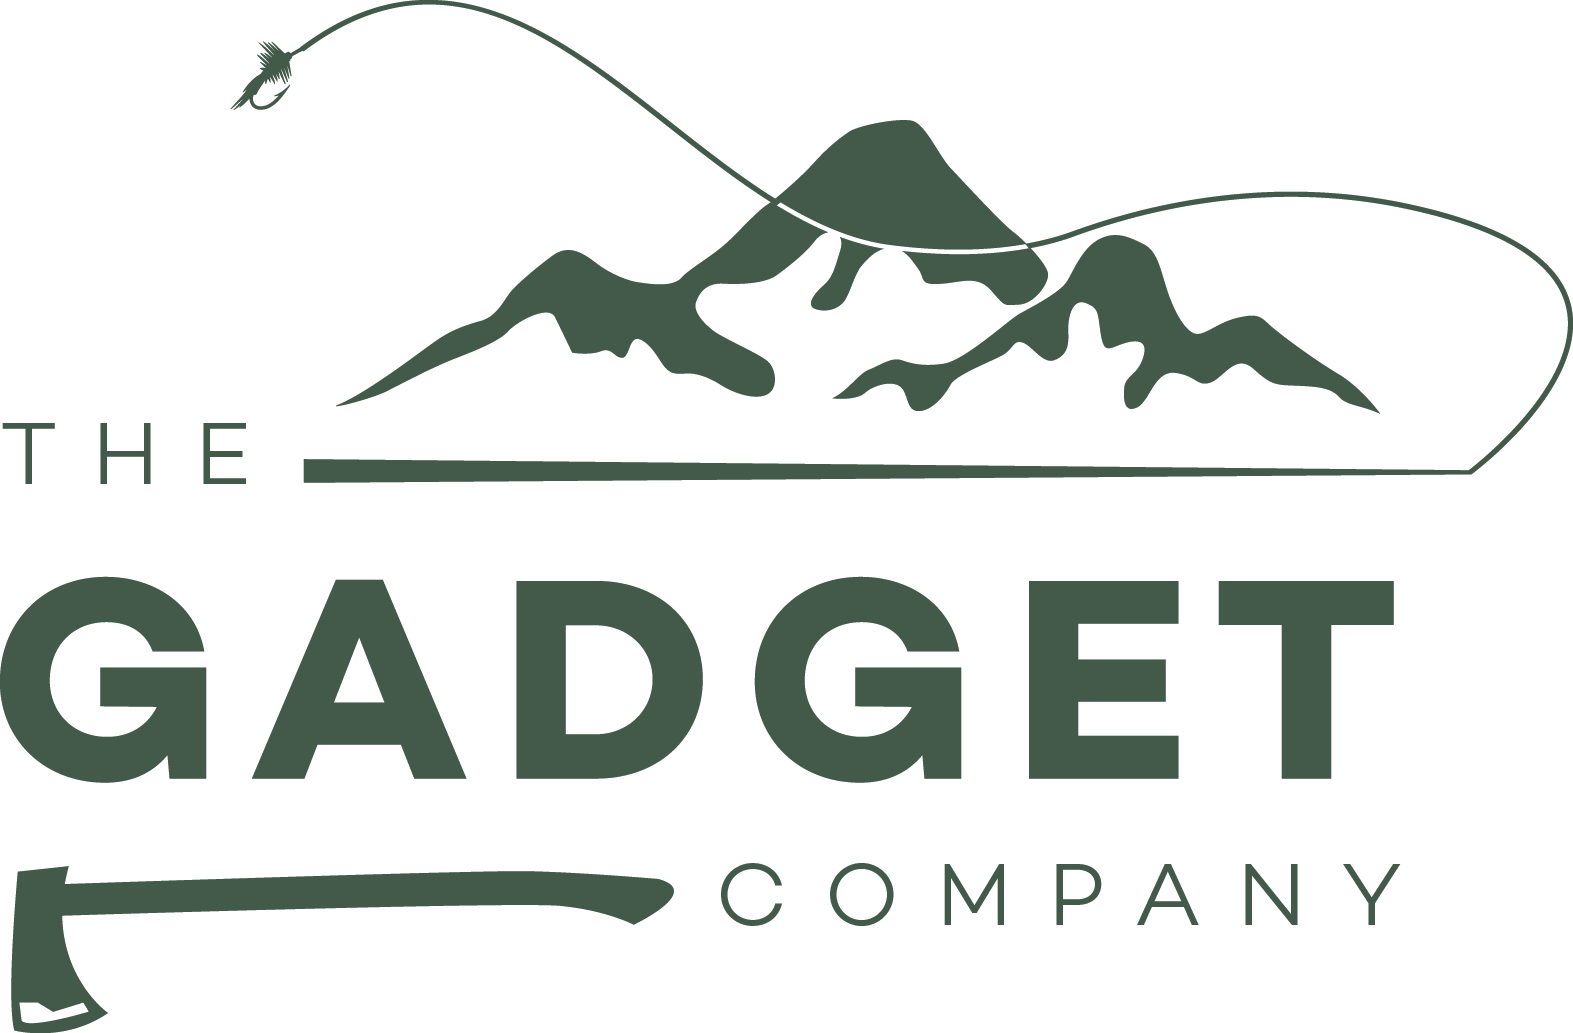 The Gadget Company